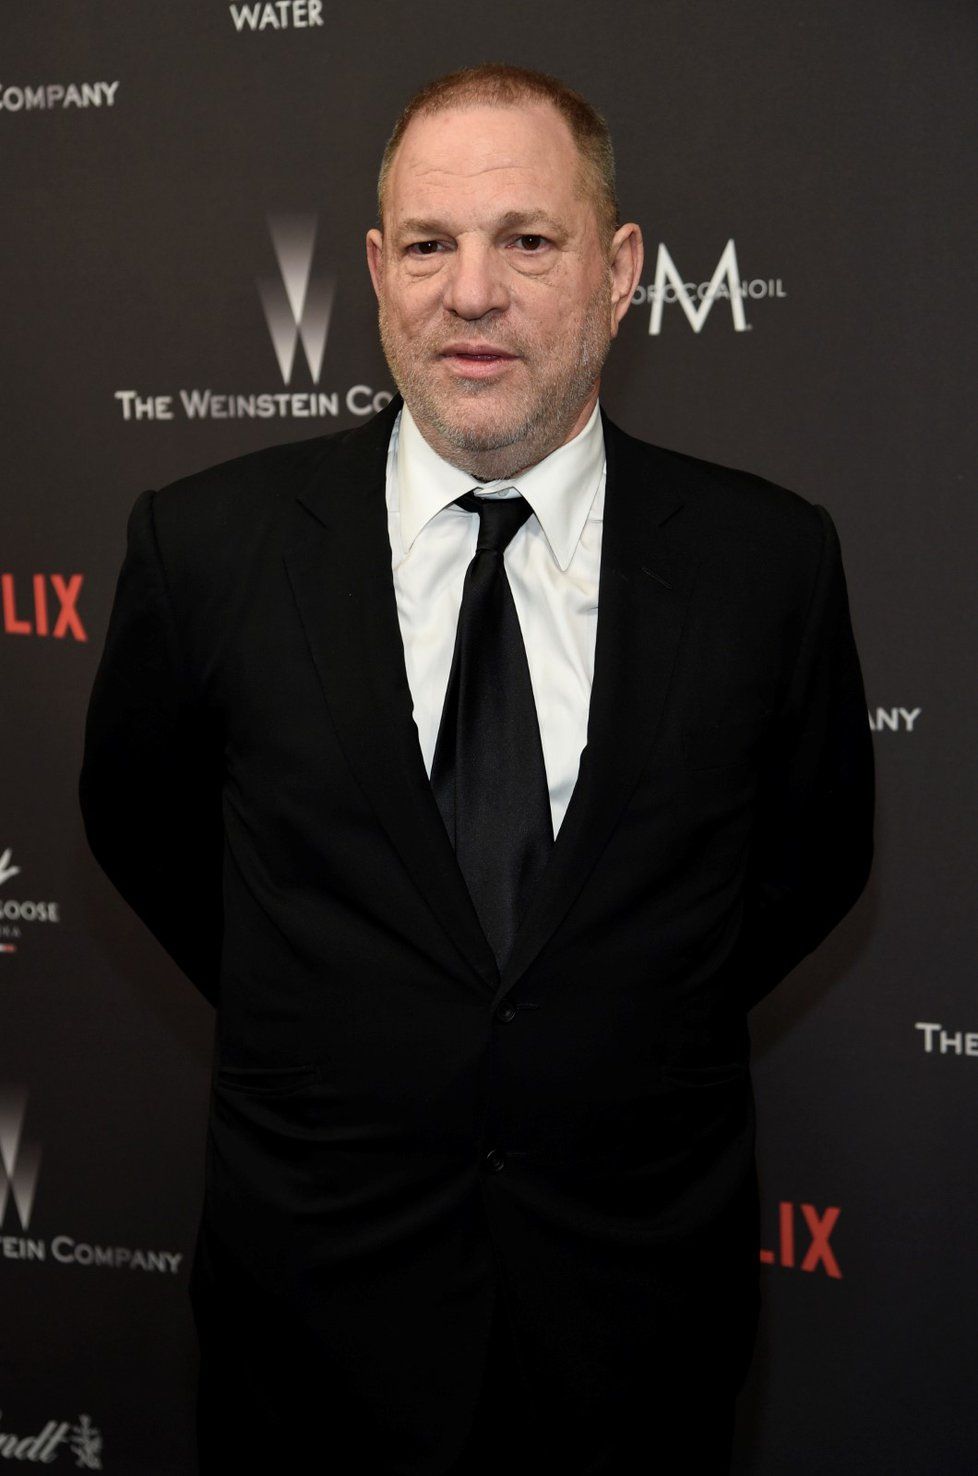 Harvey Weinstein, hollywoodský producent